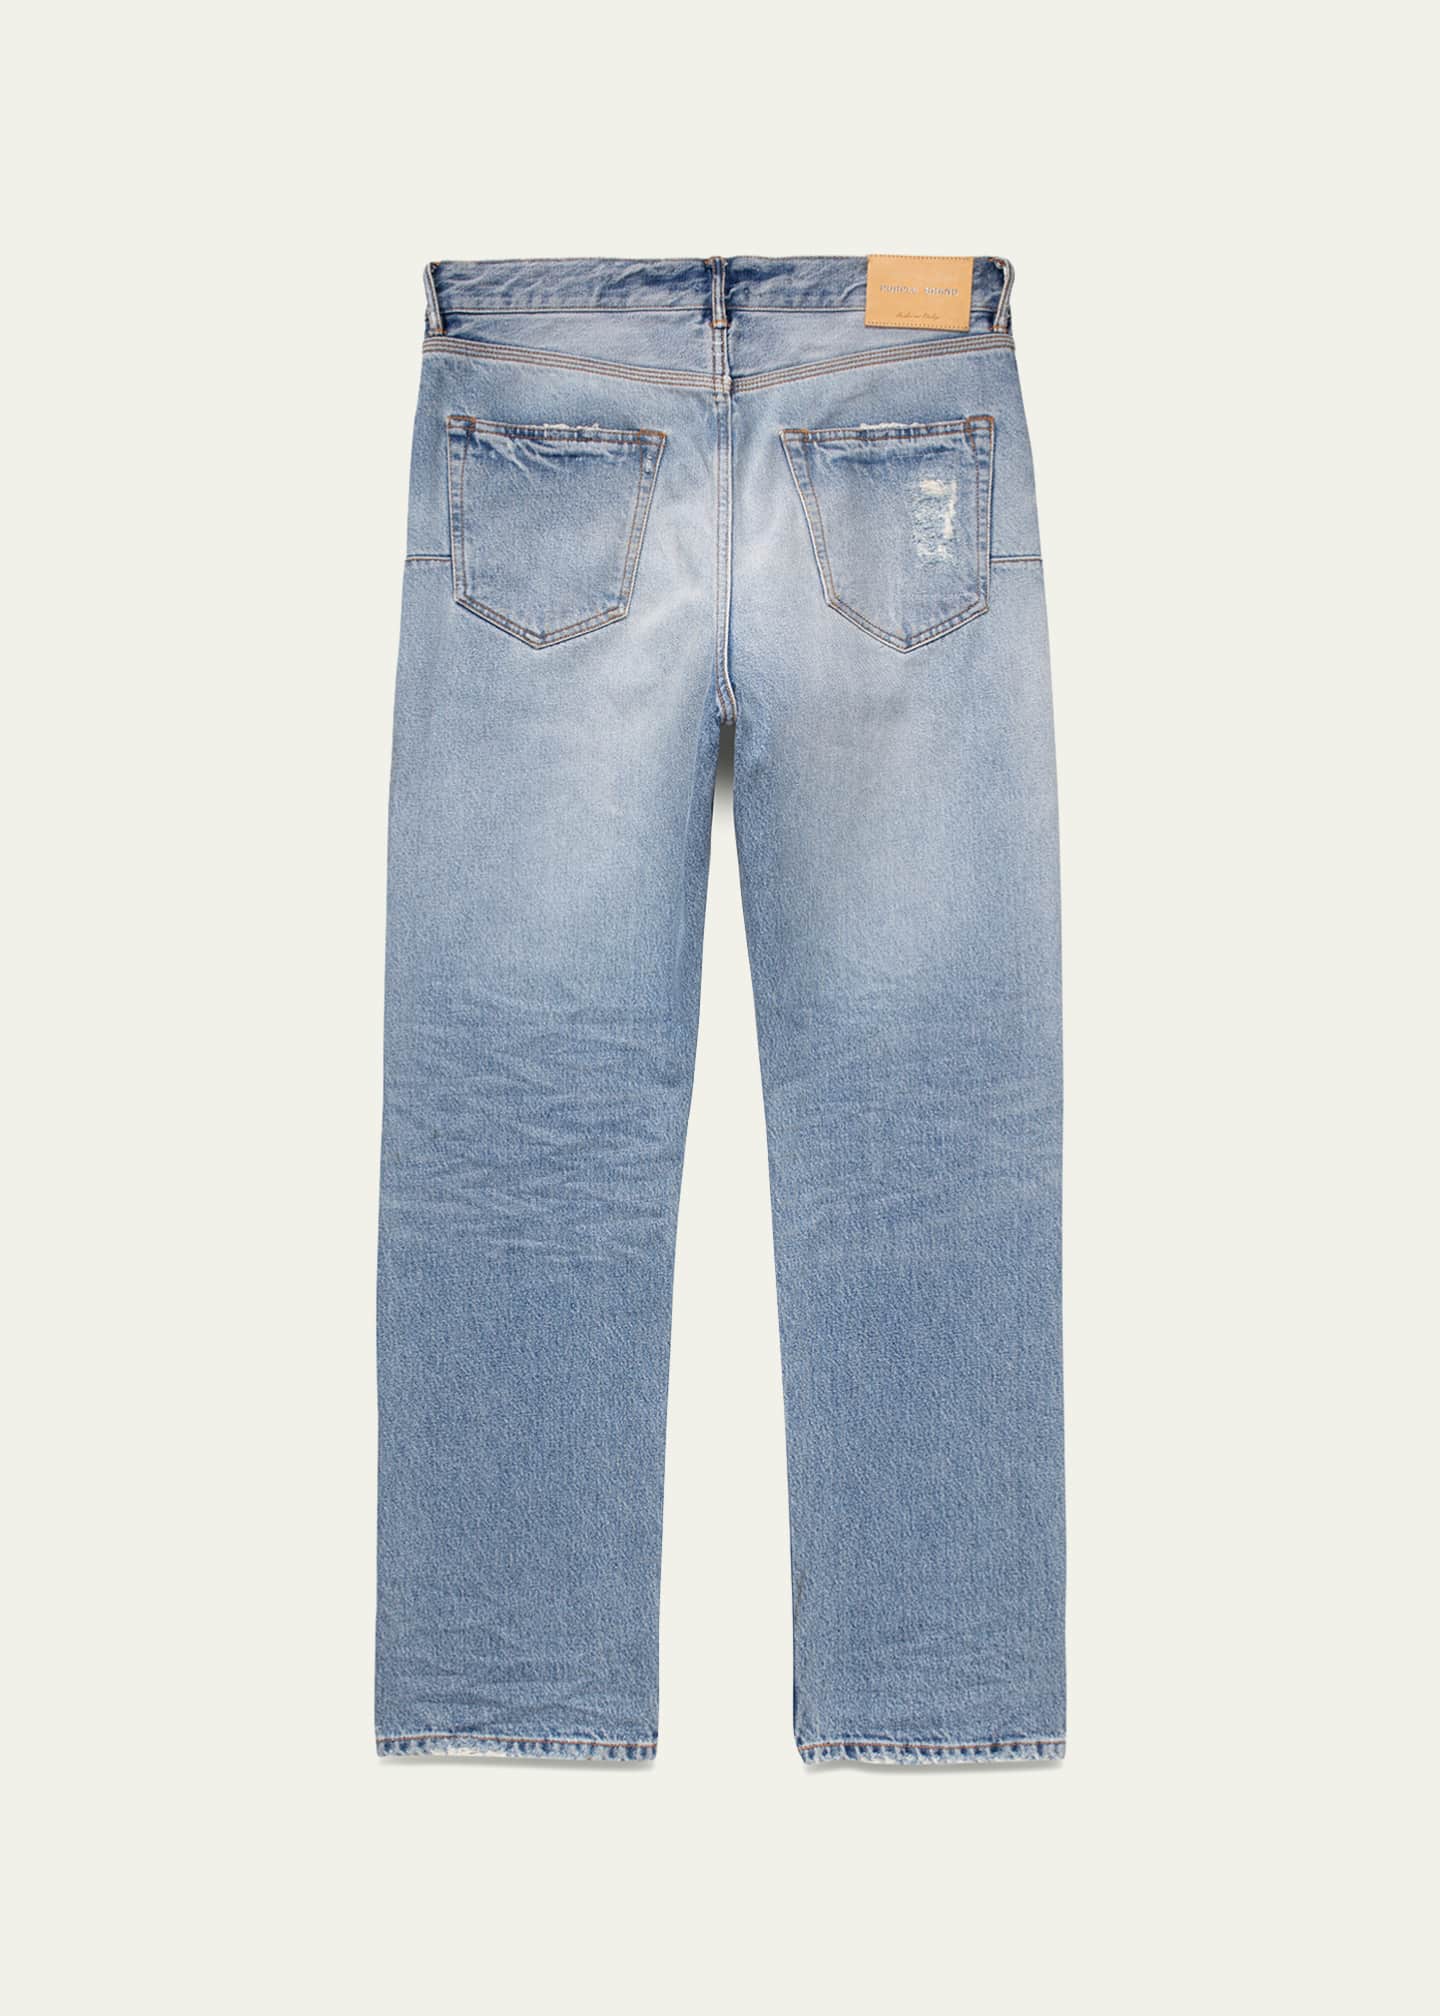 PURPLE Men's Worn Studded Repair Relaxed-Fit Jeans - Bergdorf Goodman